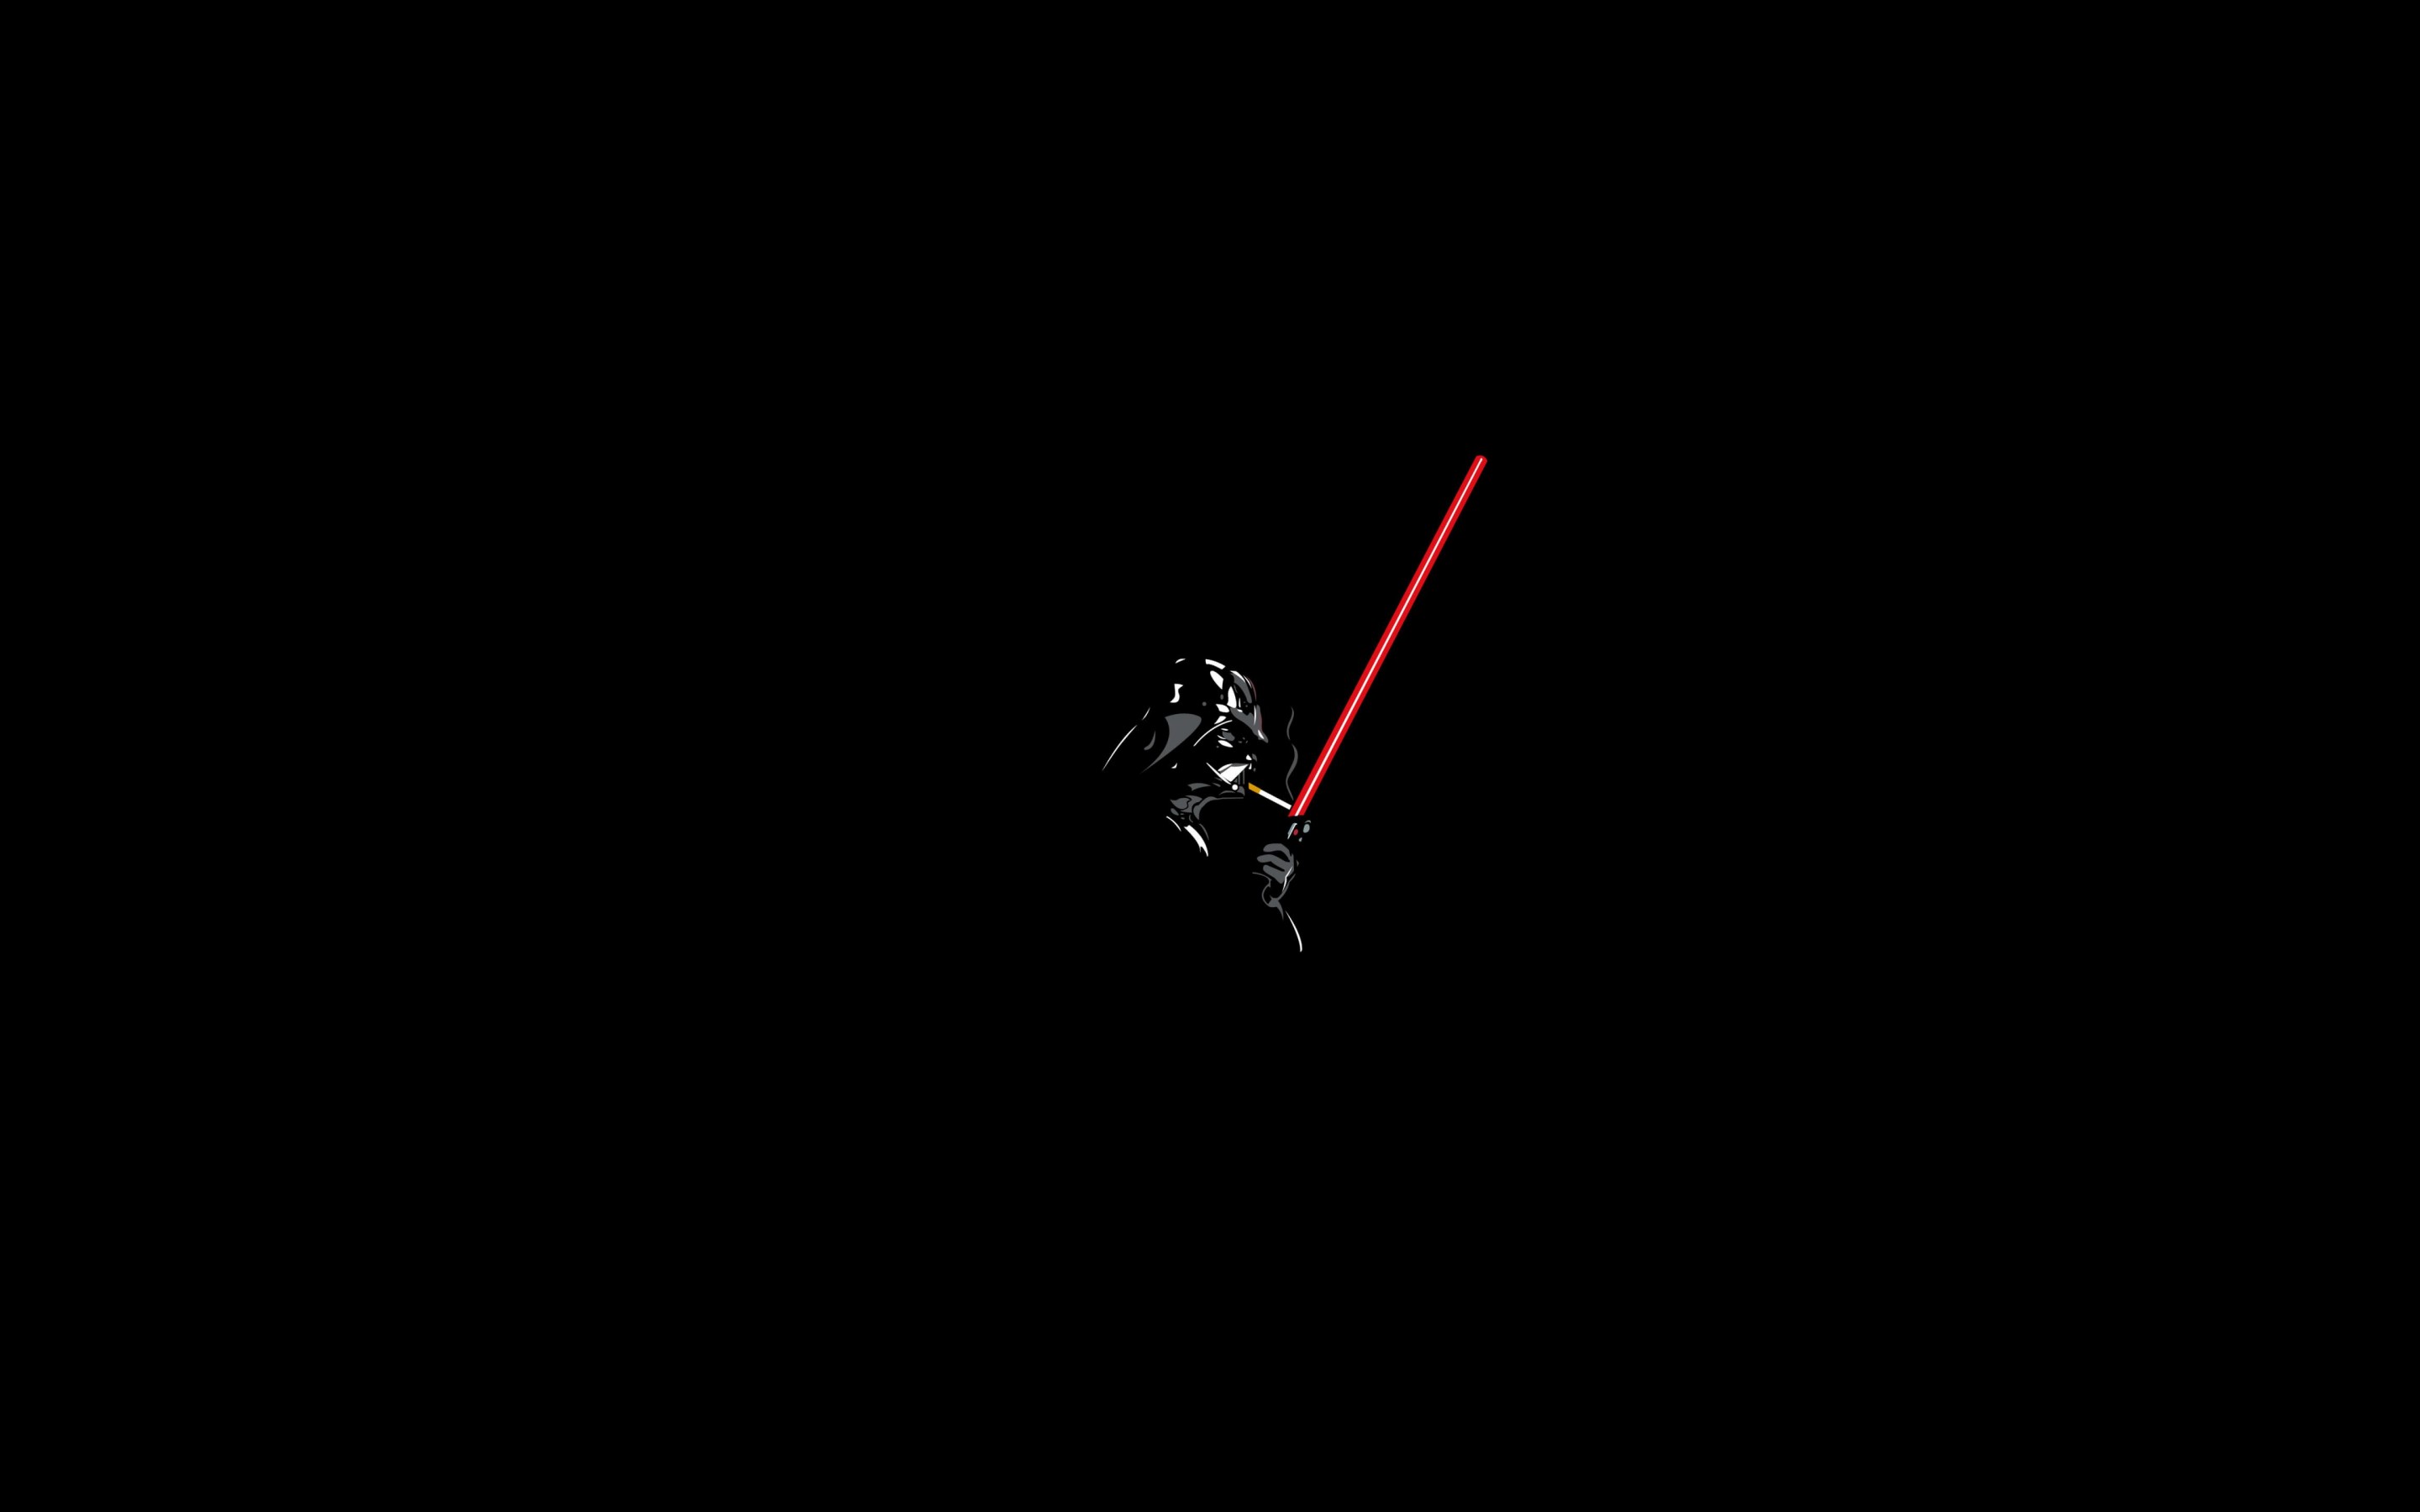 Darth Vader Lighting a Cigarette Wallpaper for Desktop 2880x1800